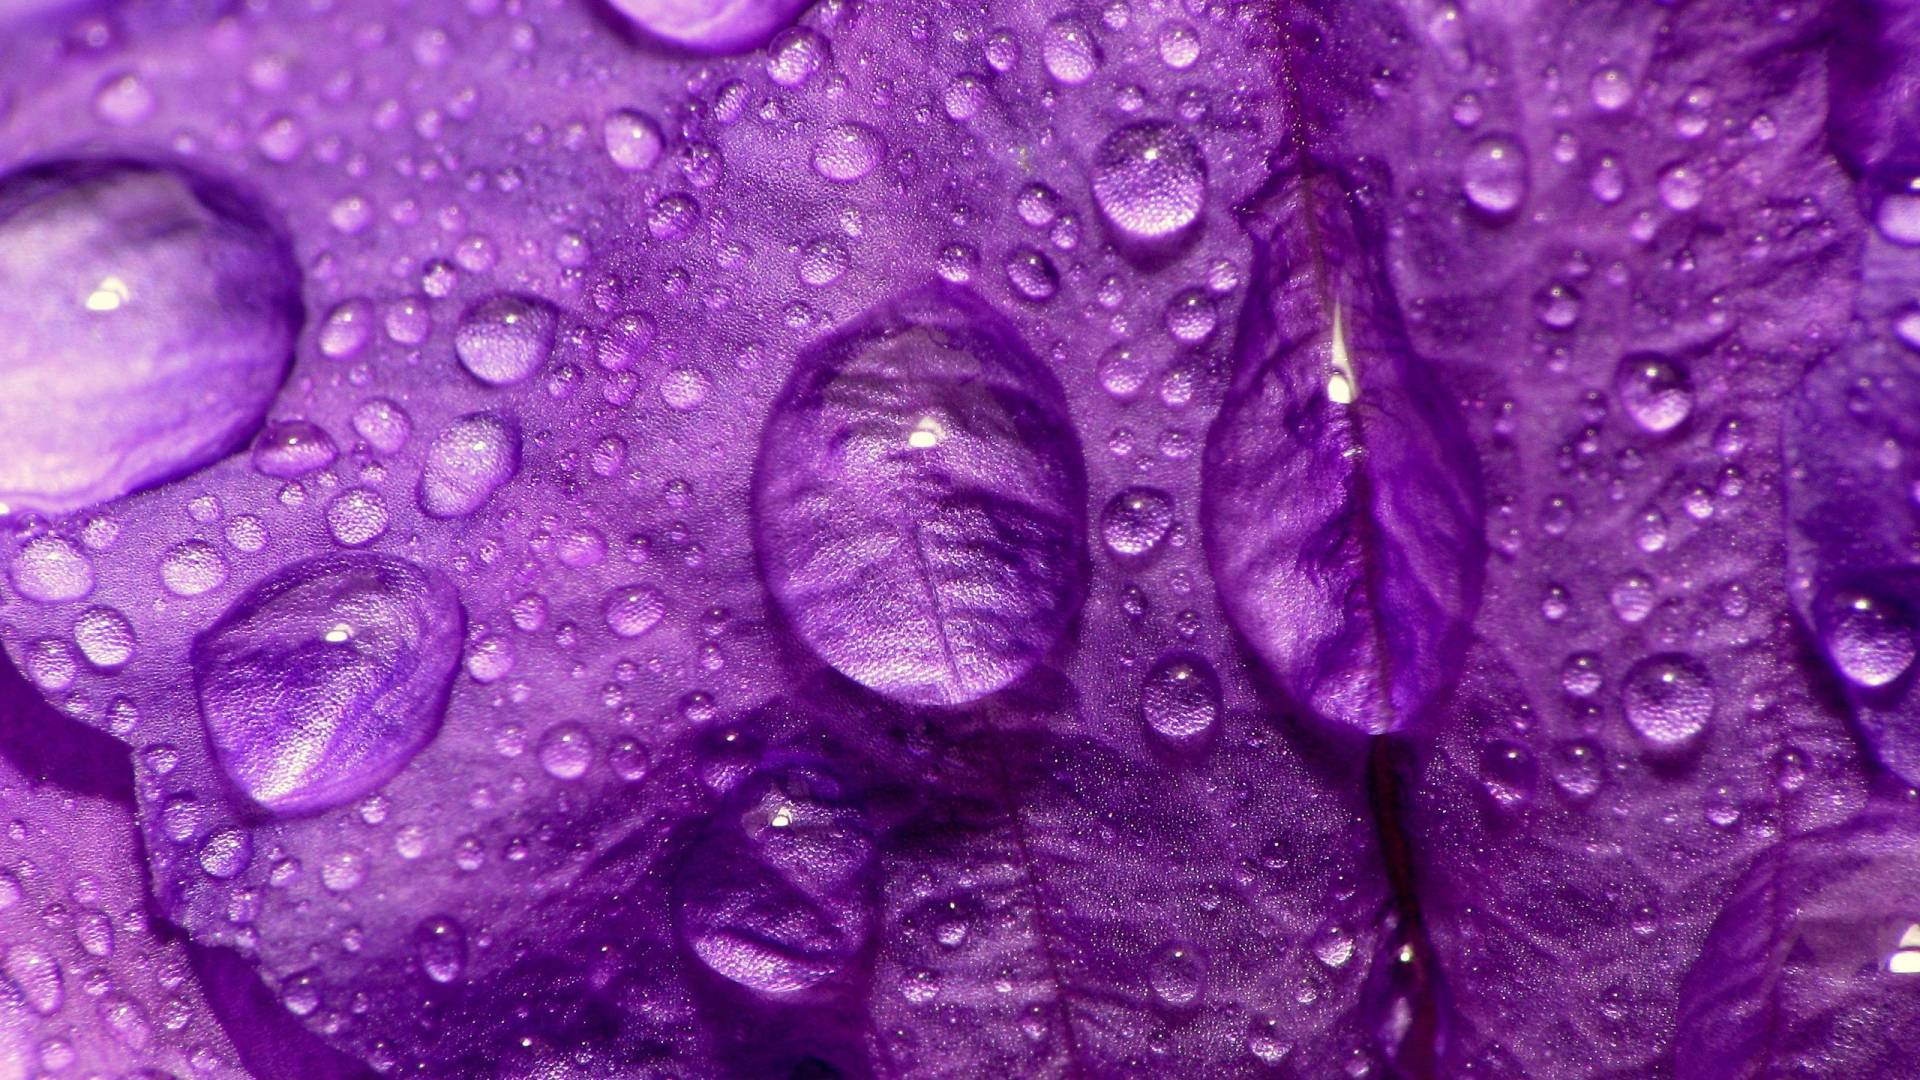 Purple Flower Wallpapers - Wallpaper Cave